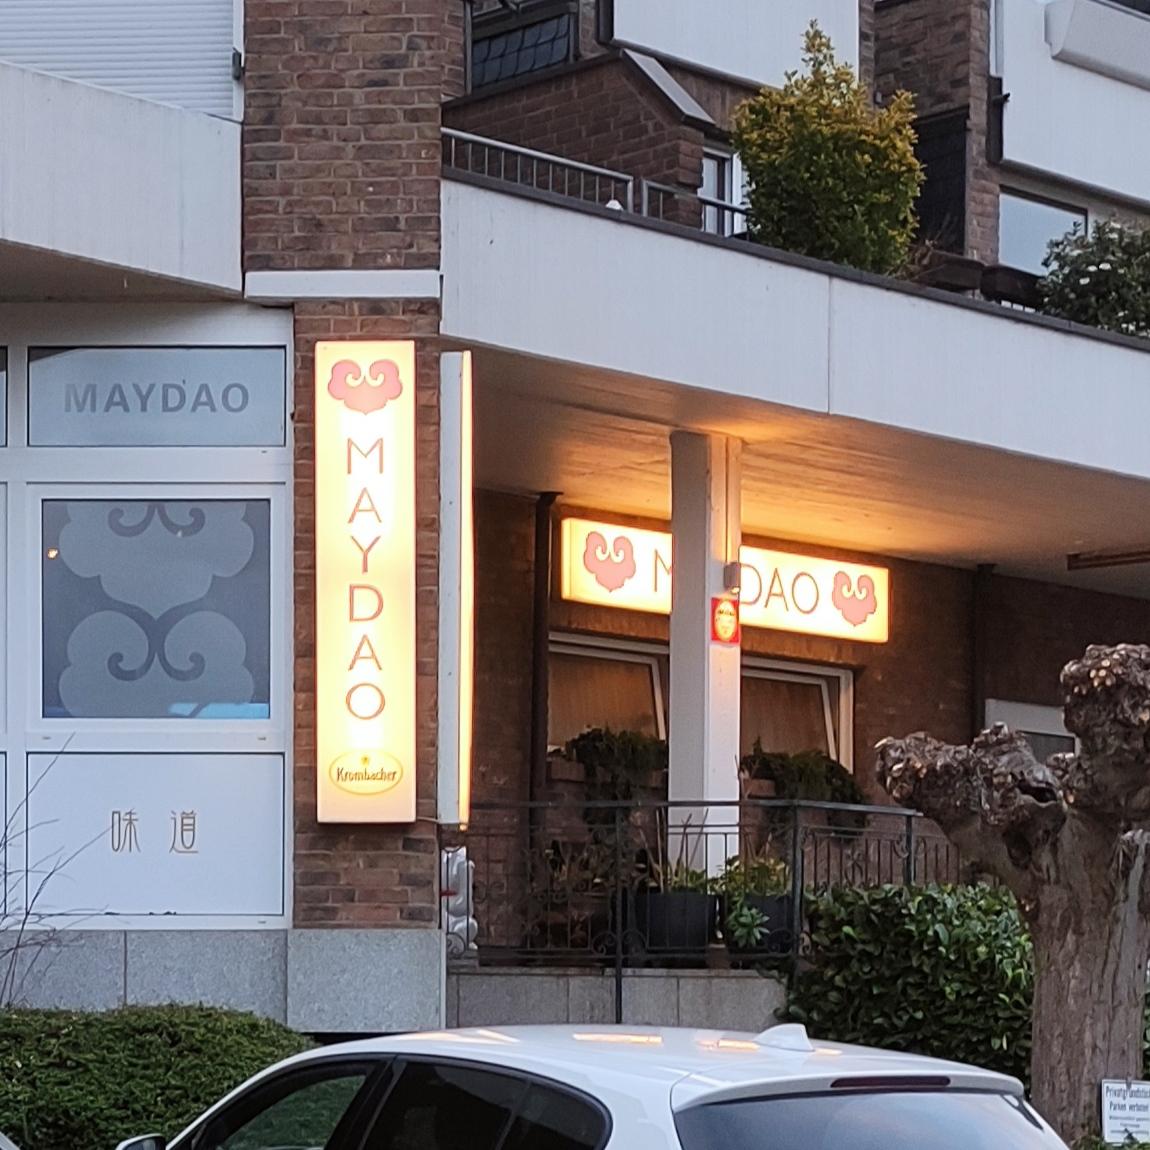 Restaurant "Maydao" in Niederkassel